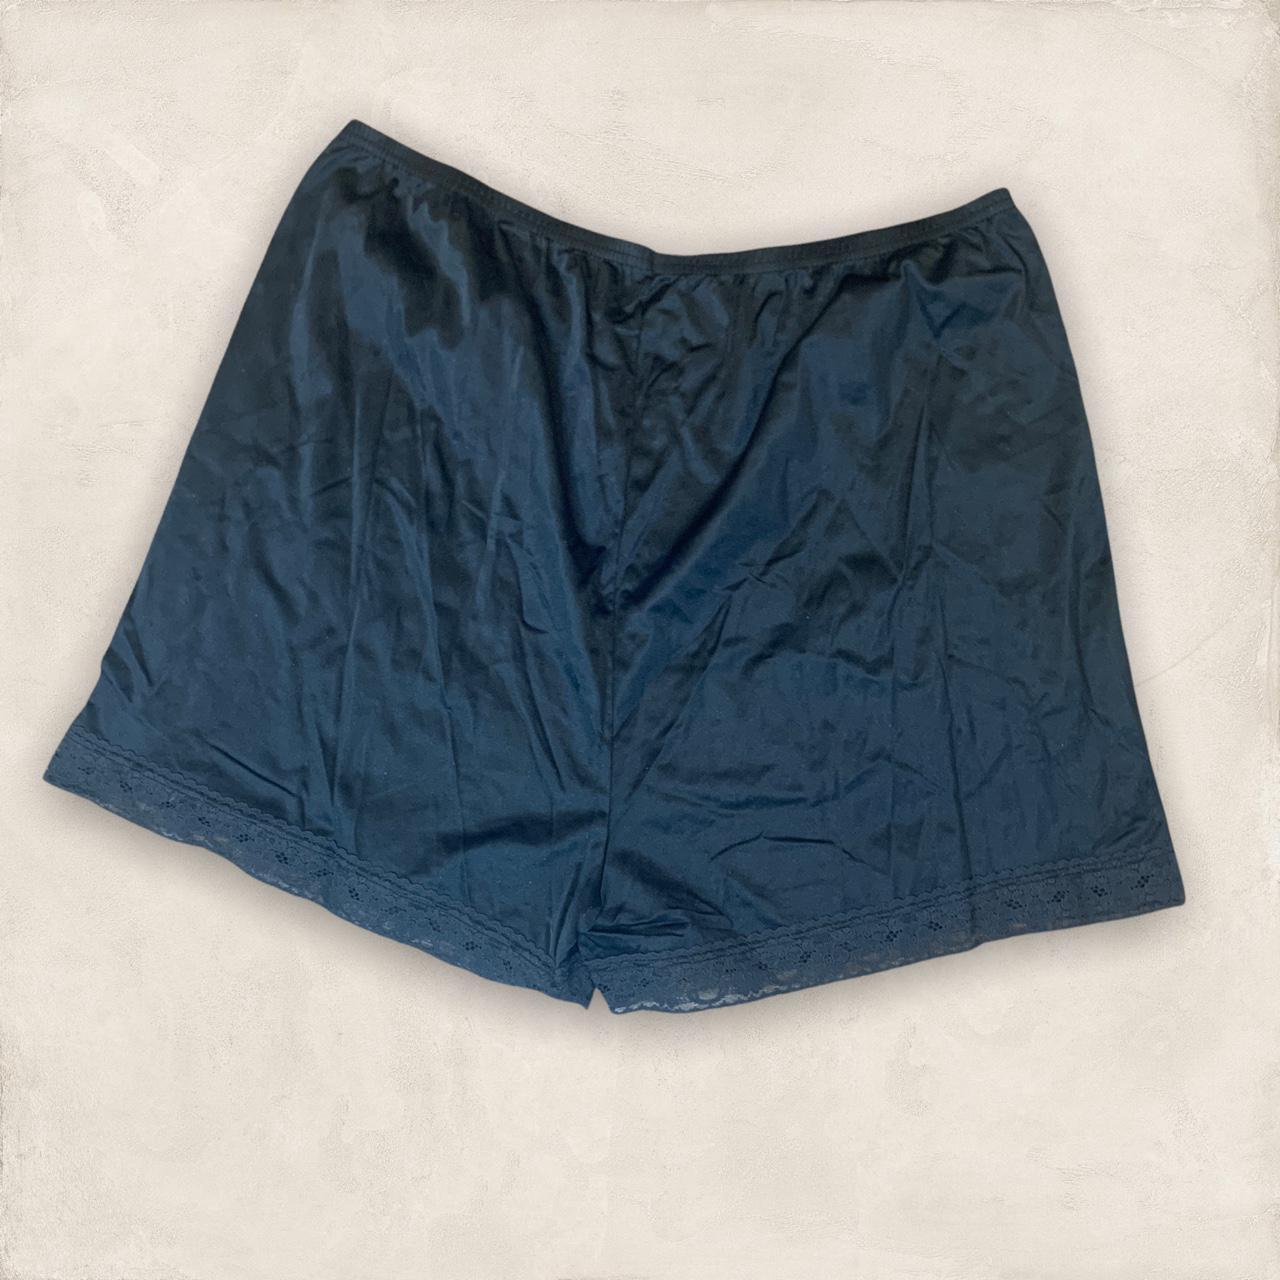 Product Image 3 - Black Bloomer Slip Shorts 
Measurements: